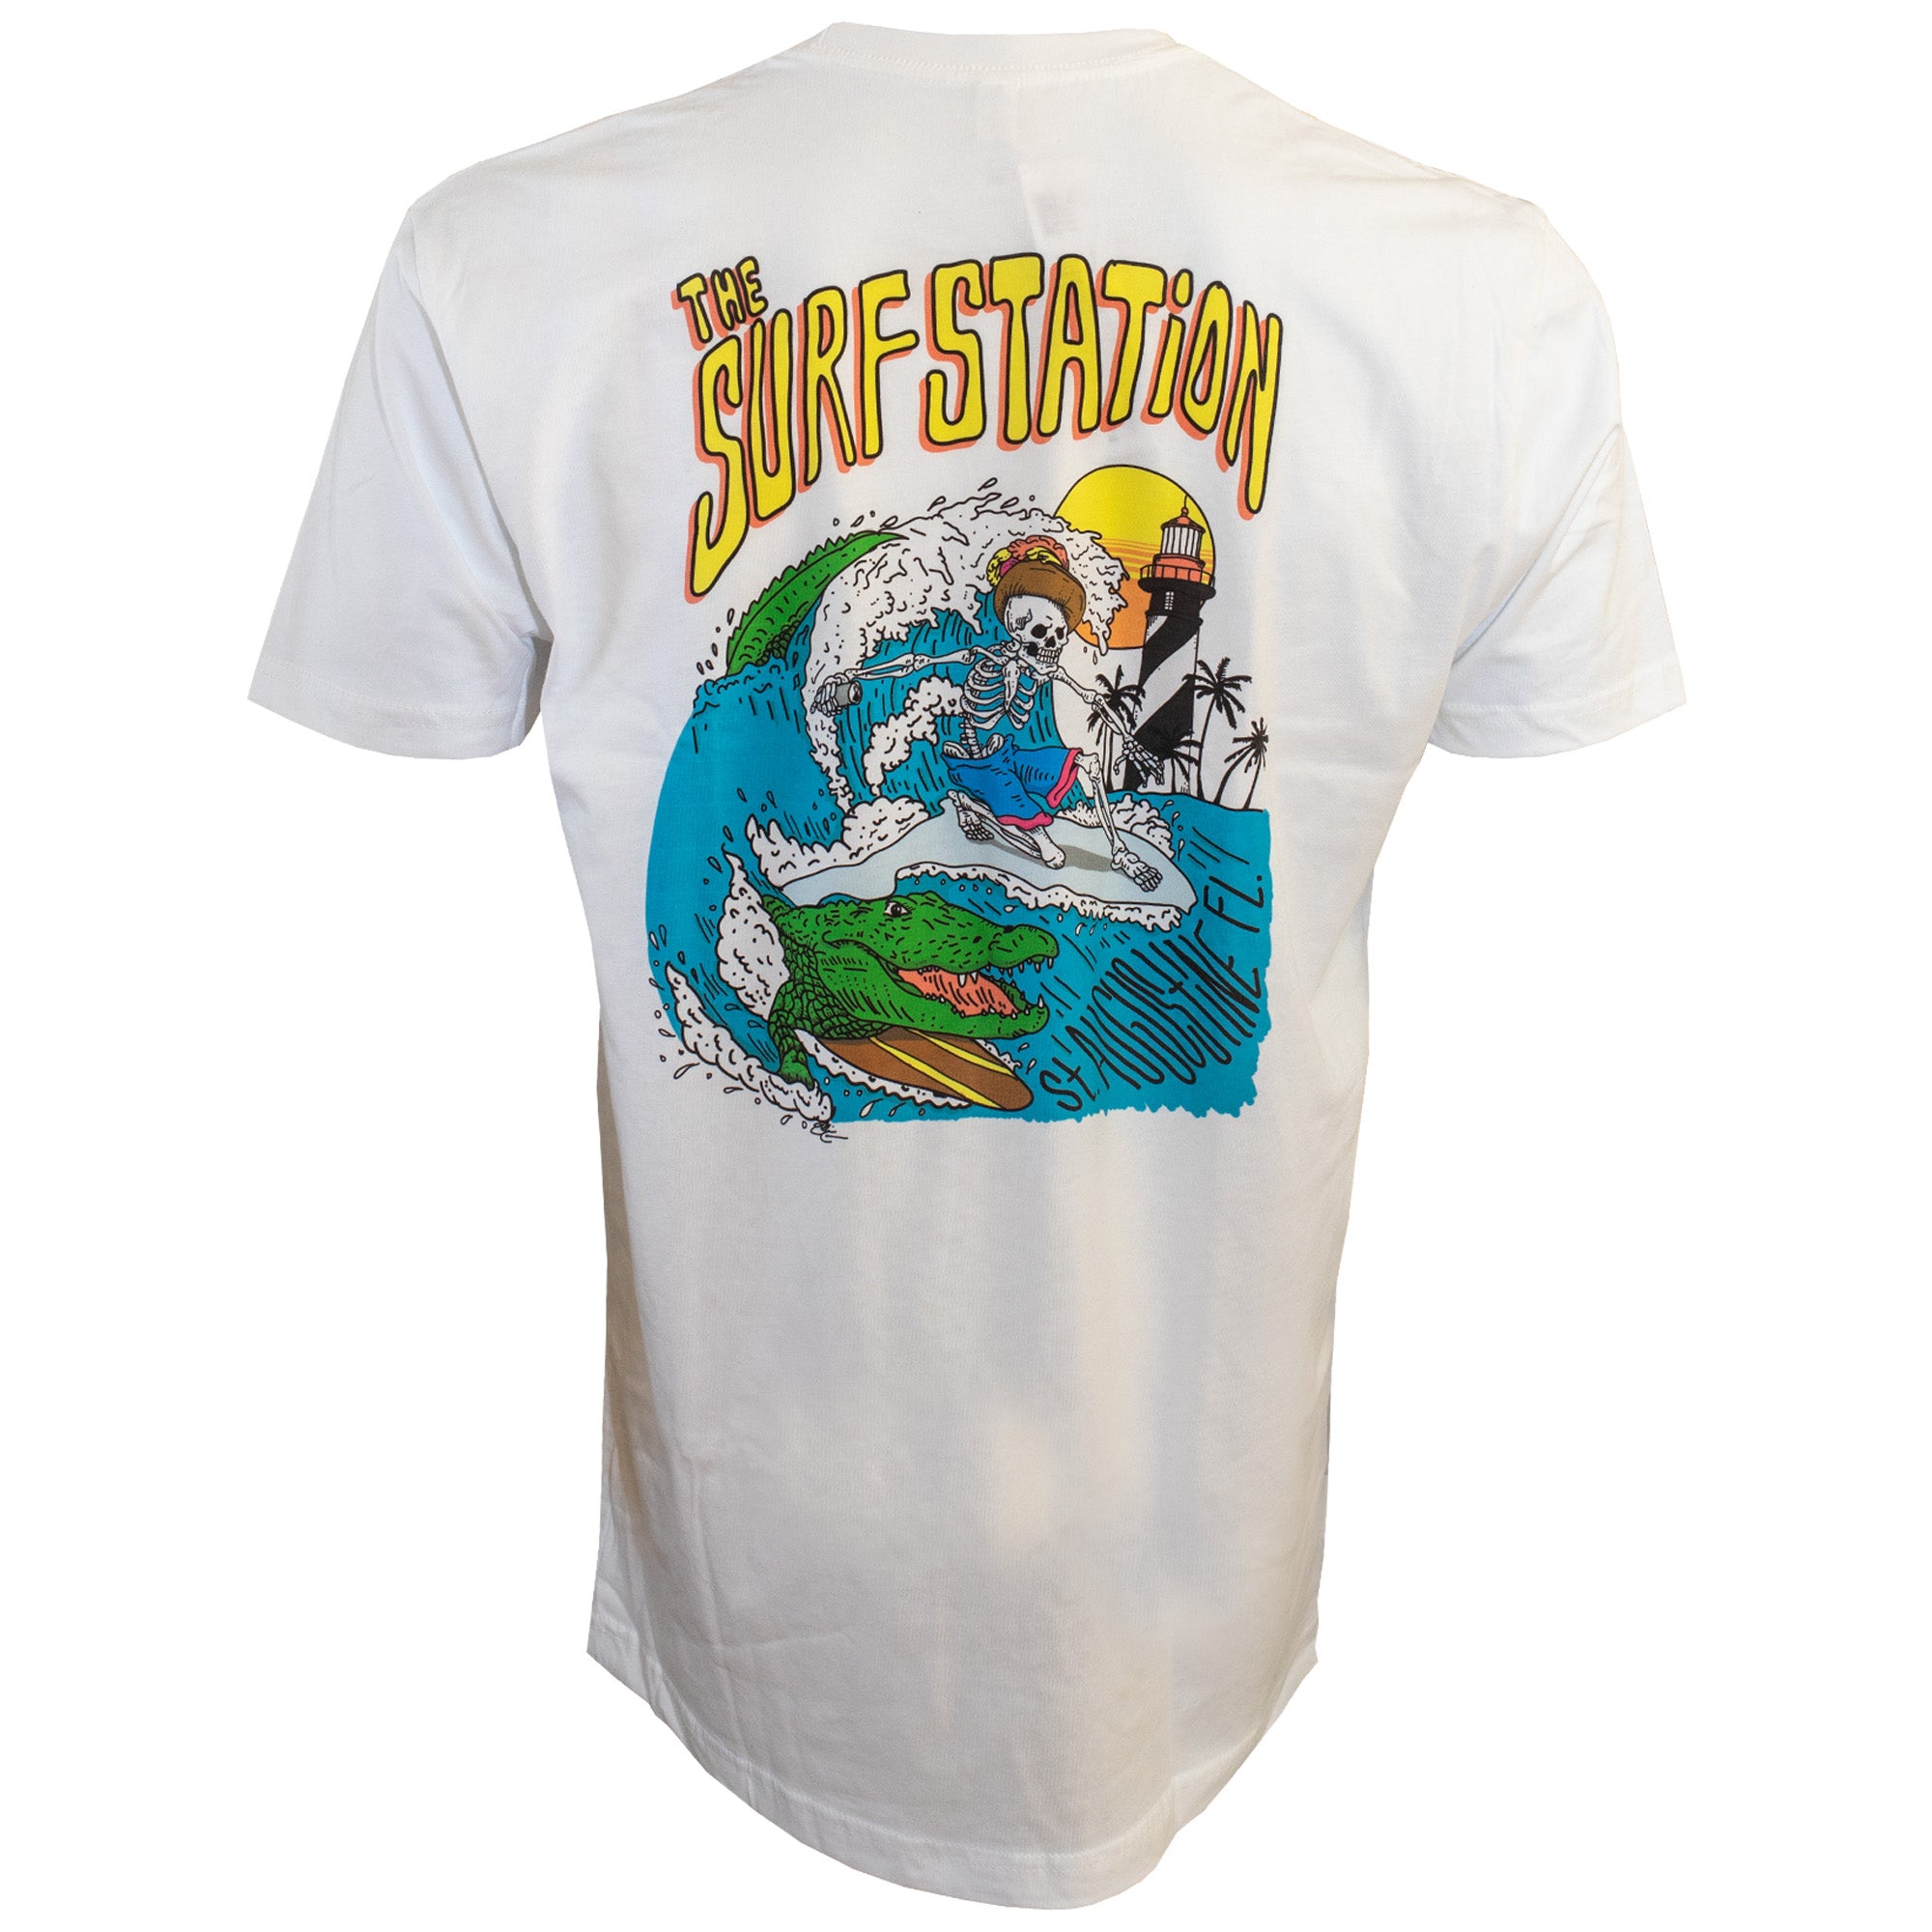 Surf Station x Edward Jiminez Skeleton Gator Men's S/S T-Shirt